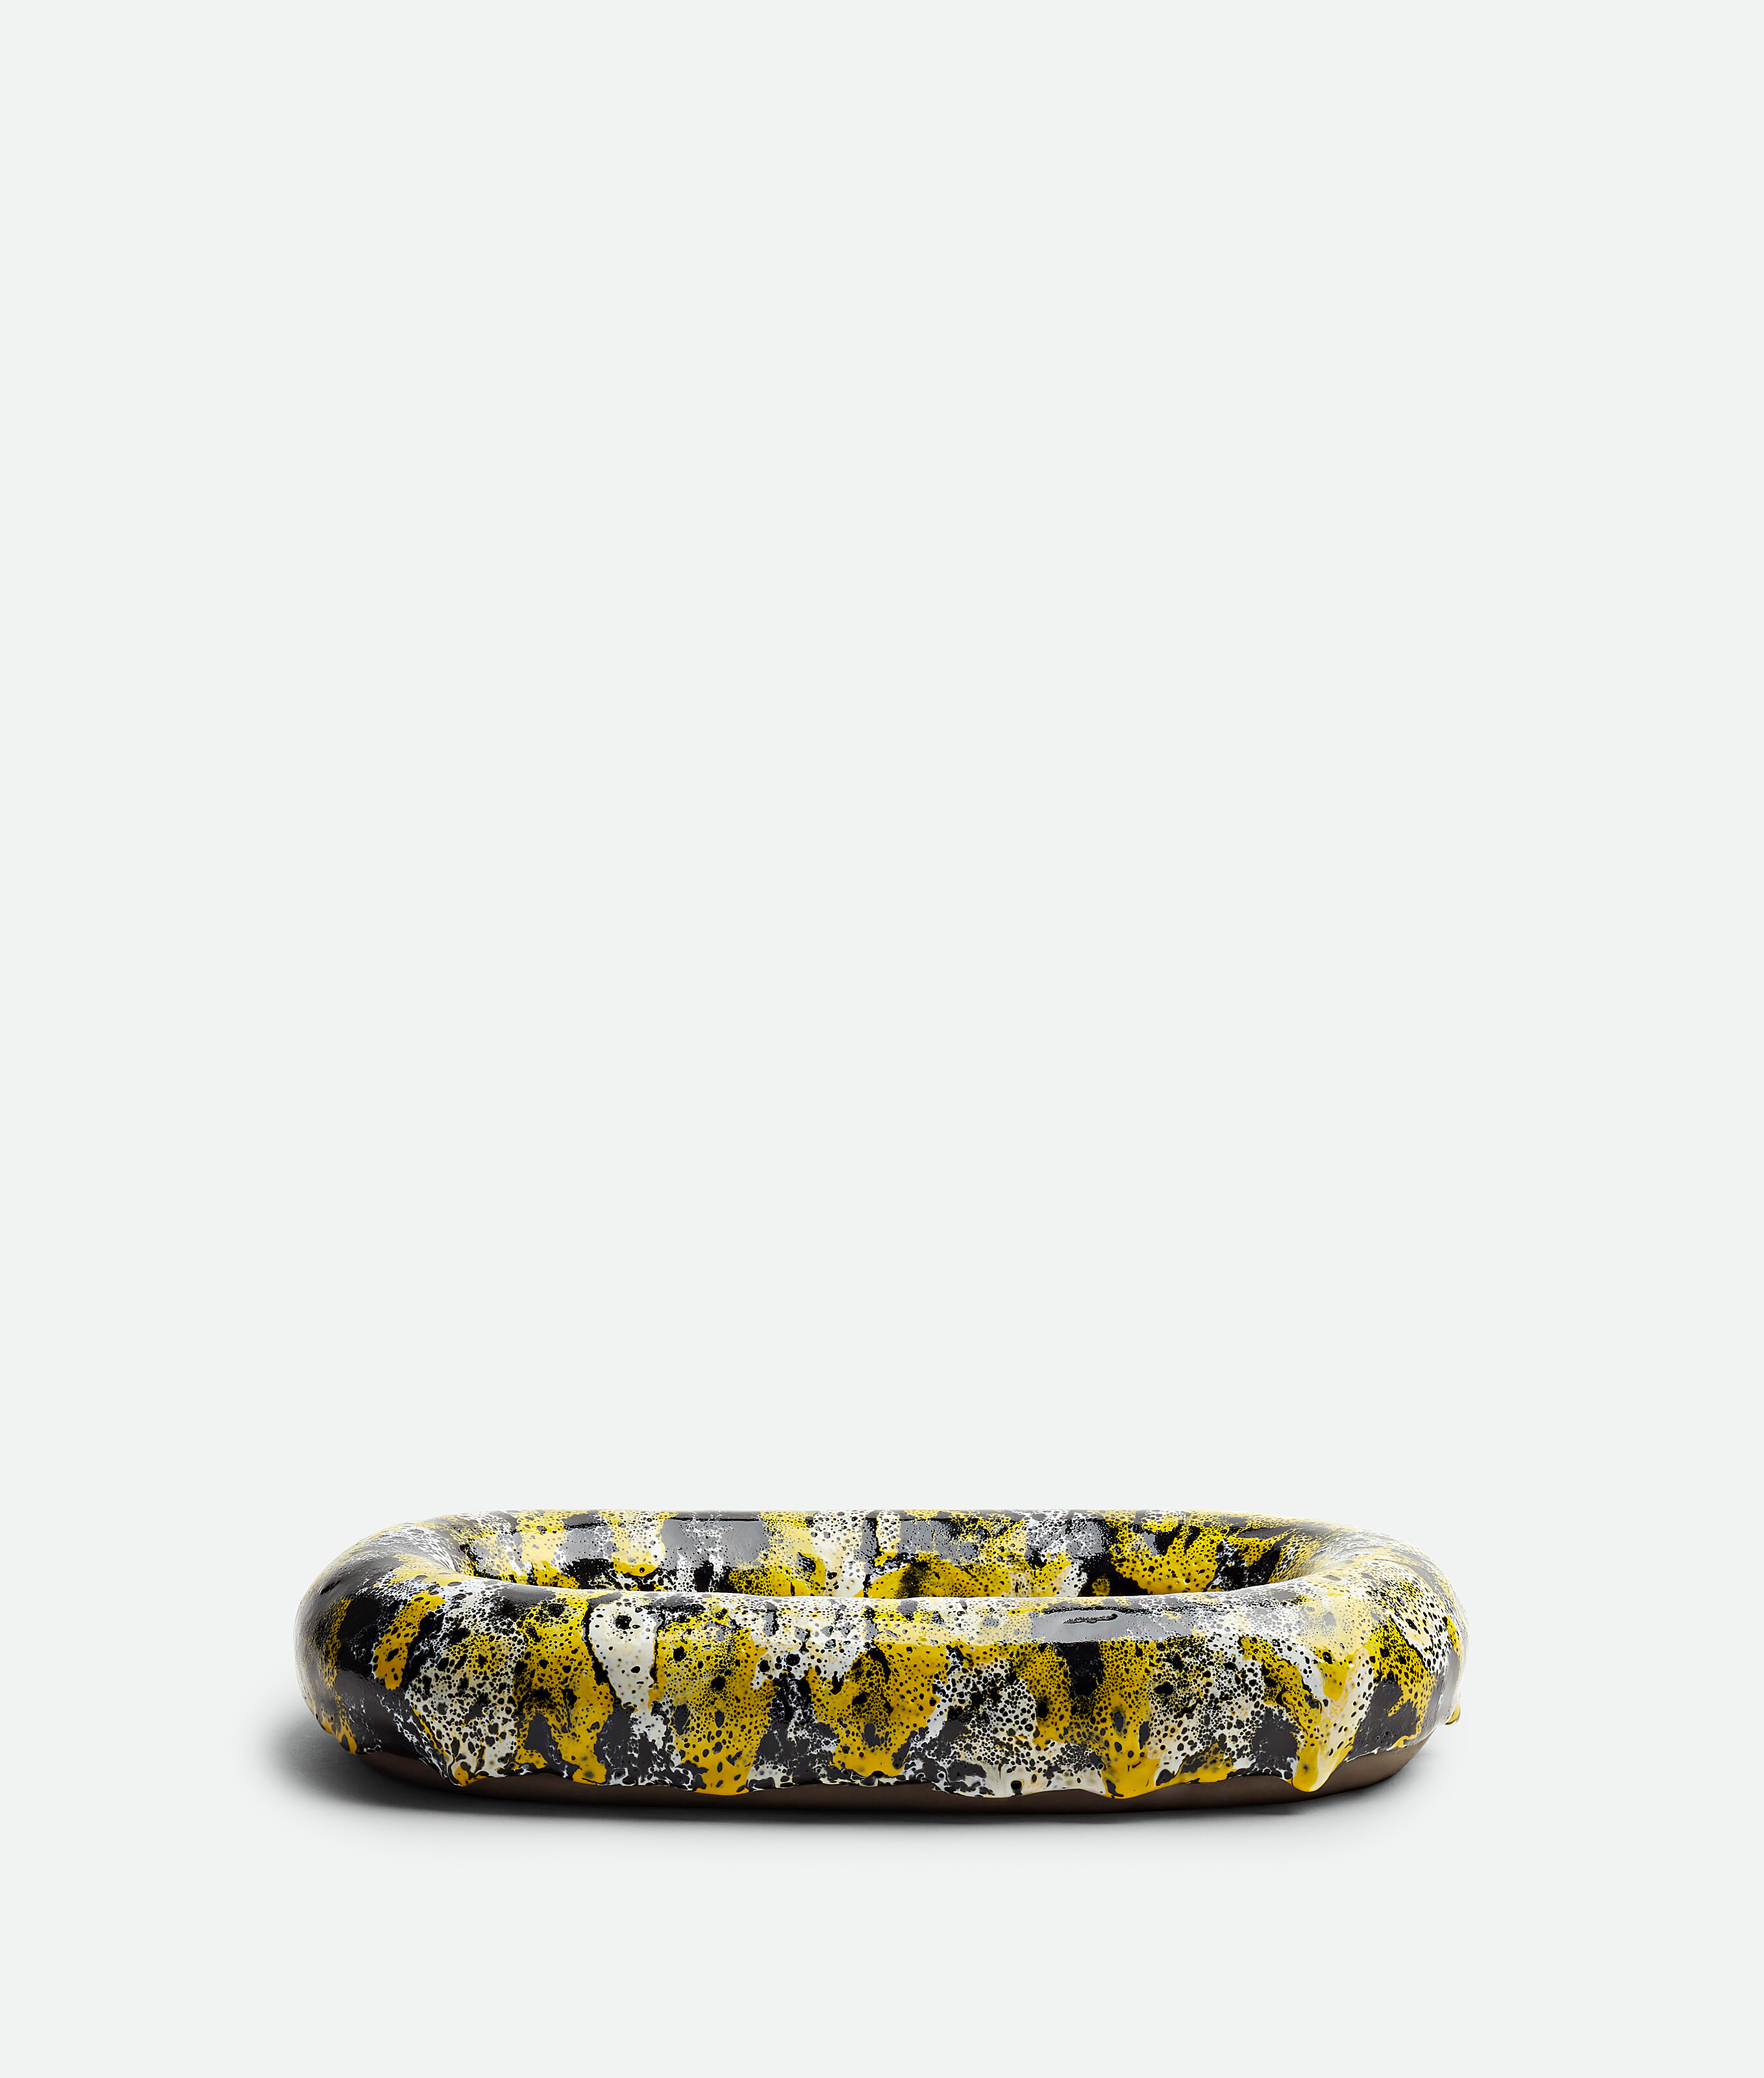 Bottega Veneta Ovales Tablett Mit Vulkanischer Glasur In Yellow